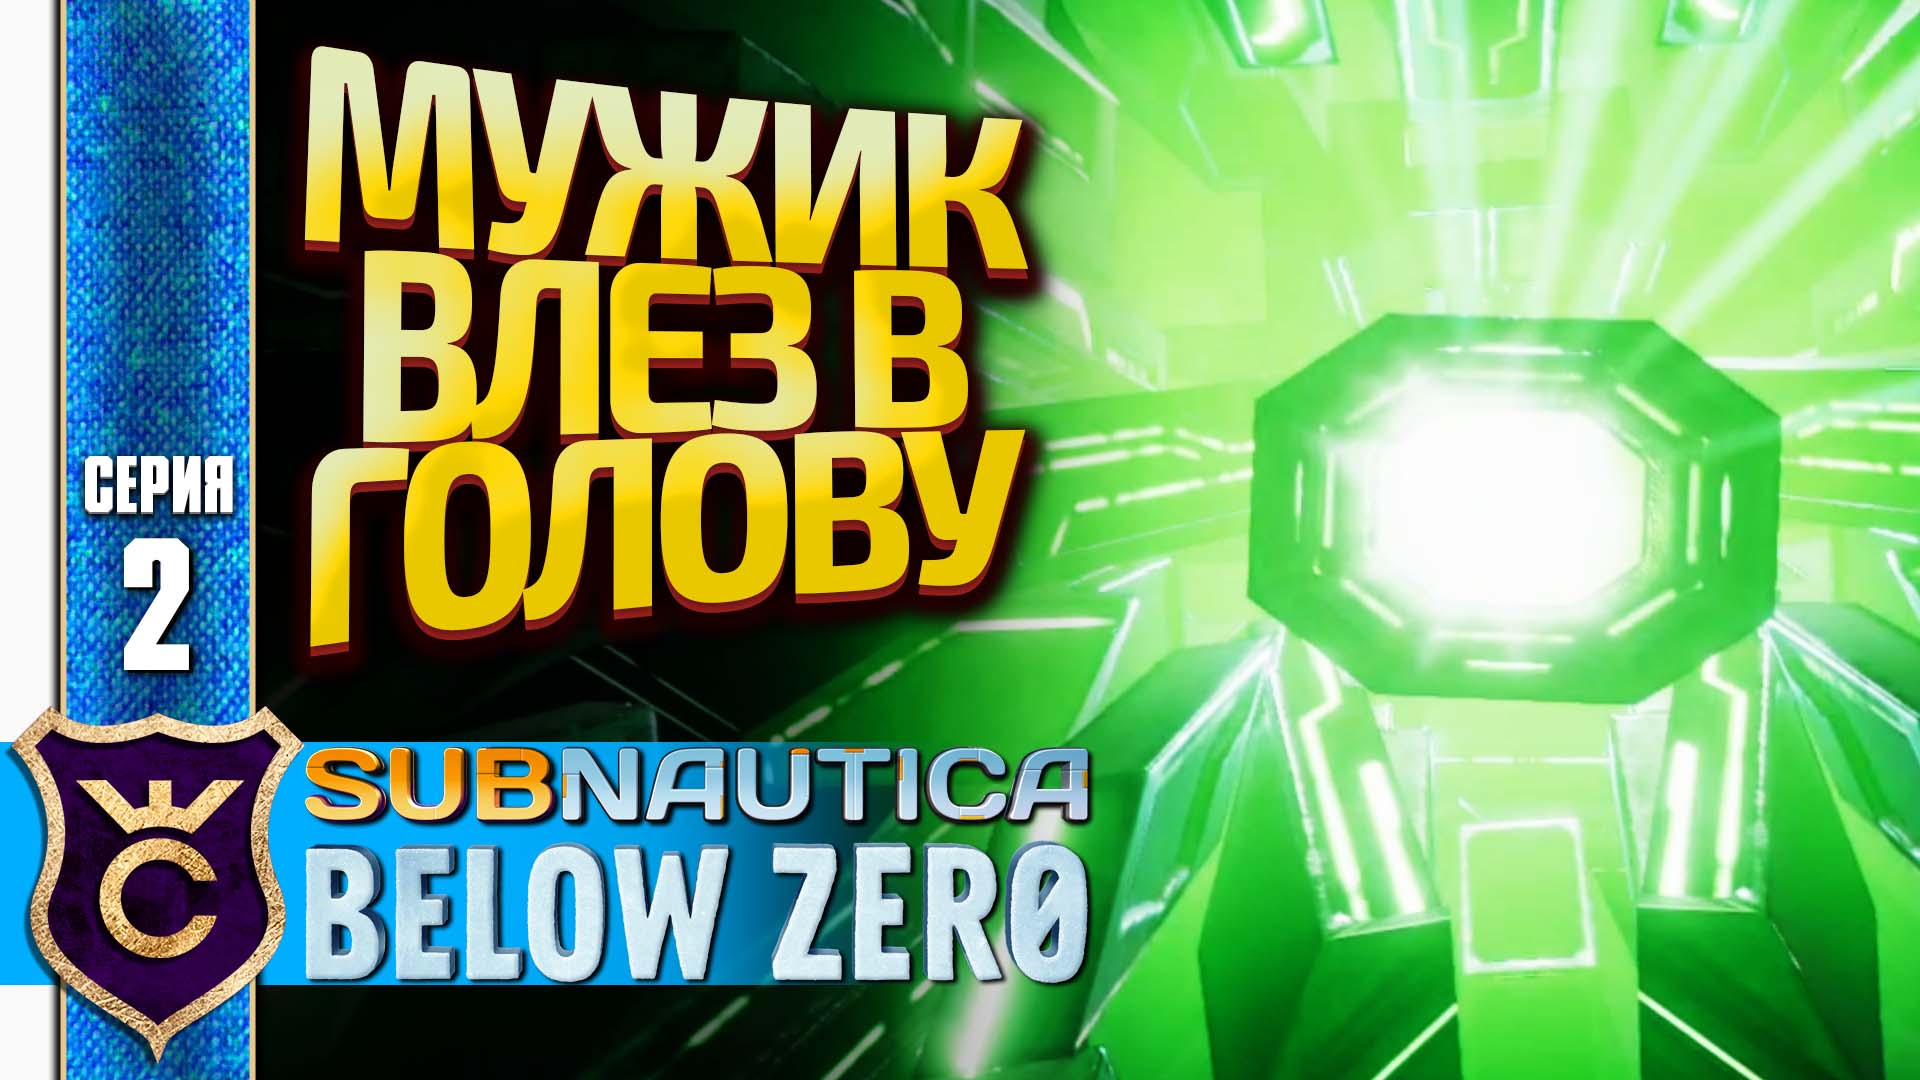 АЛАН ВЛЕЗ КО МНЕ В ГОЛОВУ! Subnautica Below Zero Русская Озвучка #2